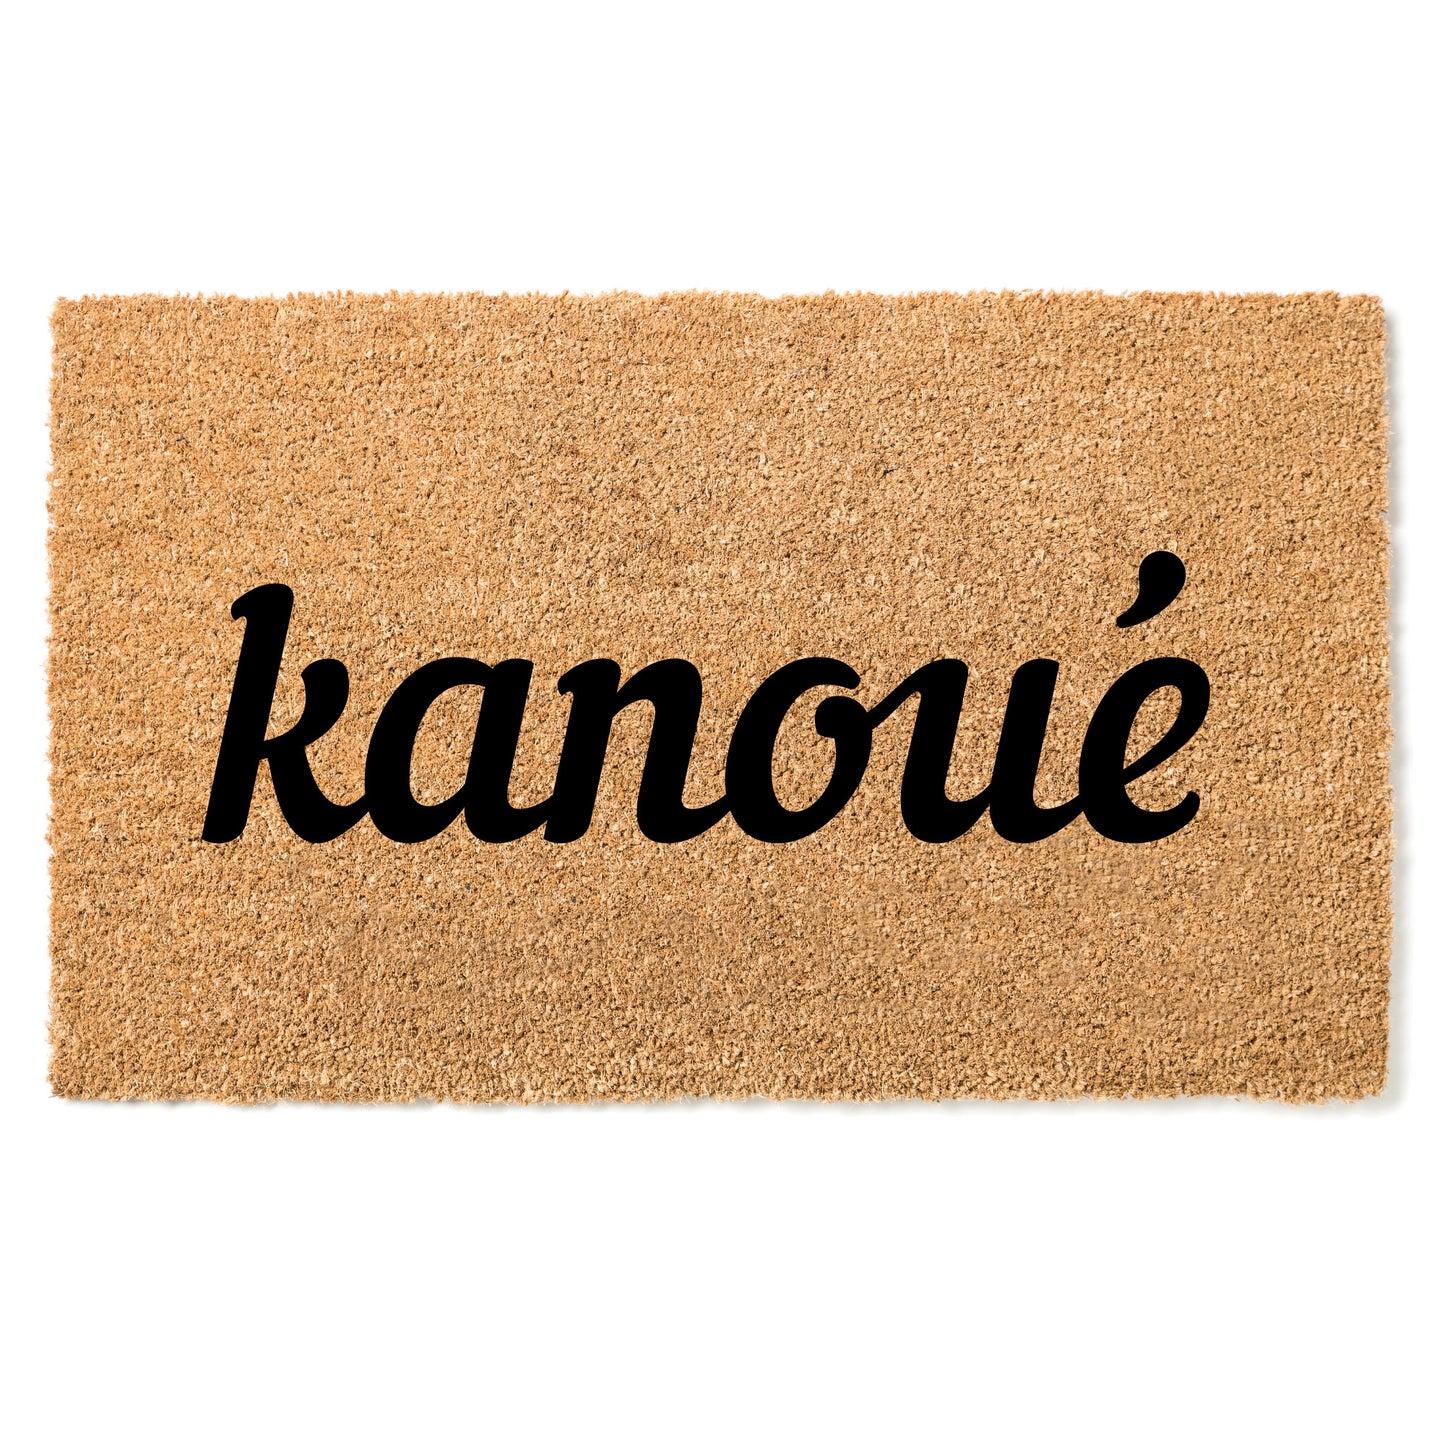 "Kanoué" door mat - Greeting in Dan